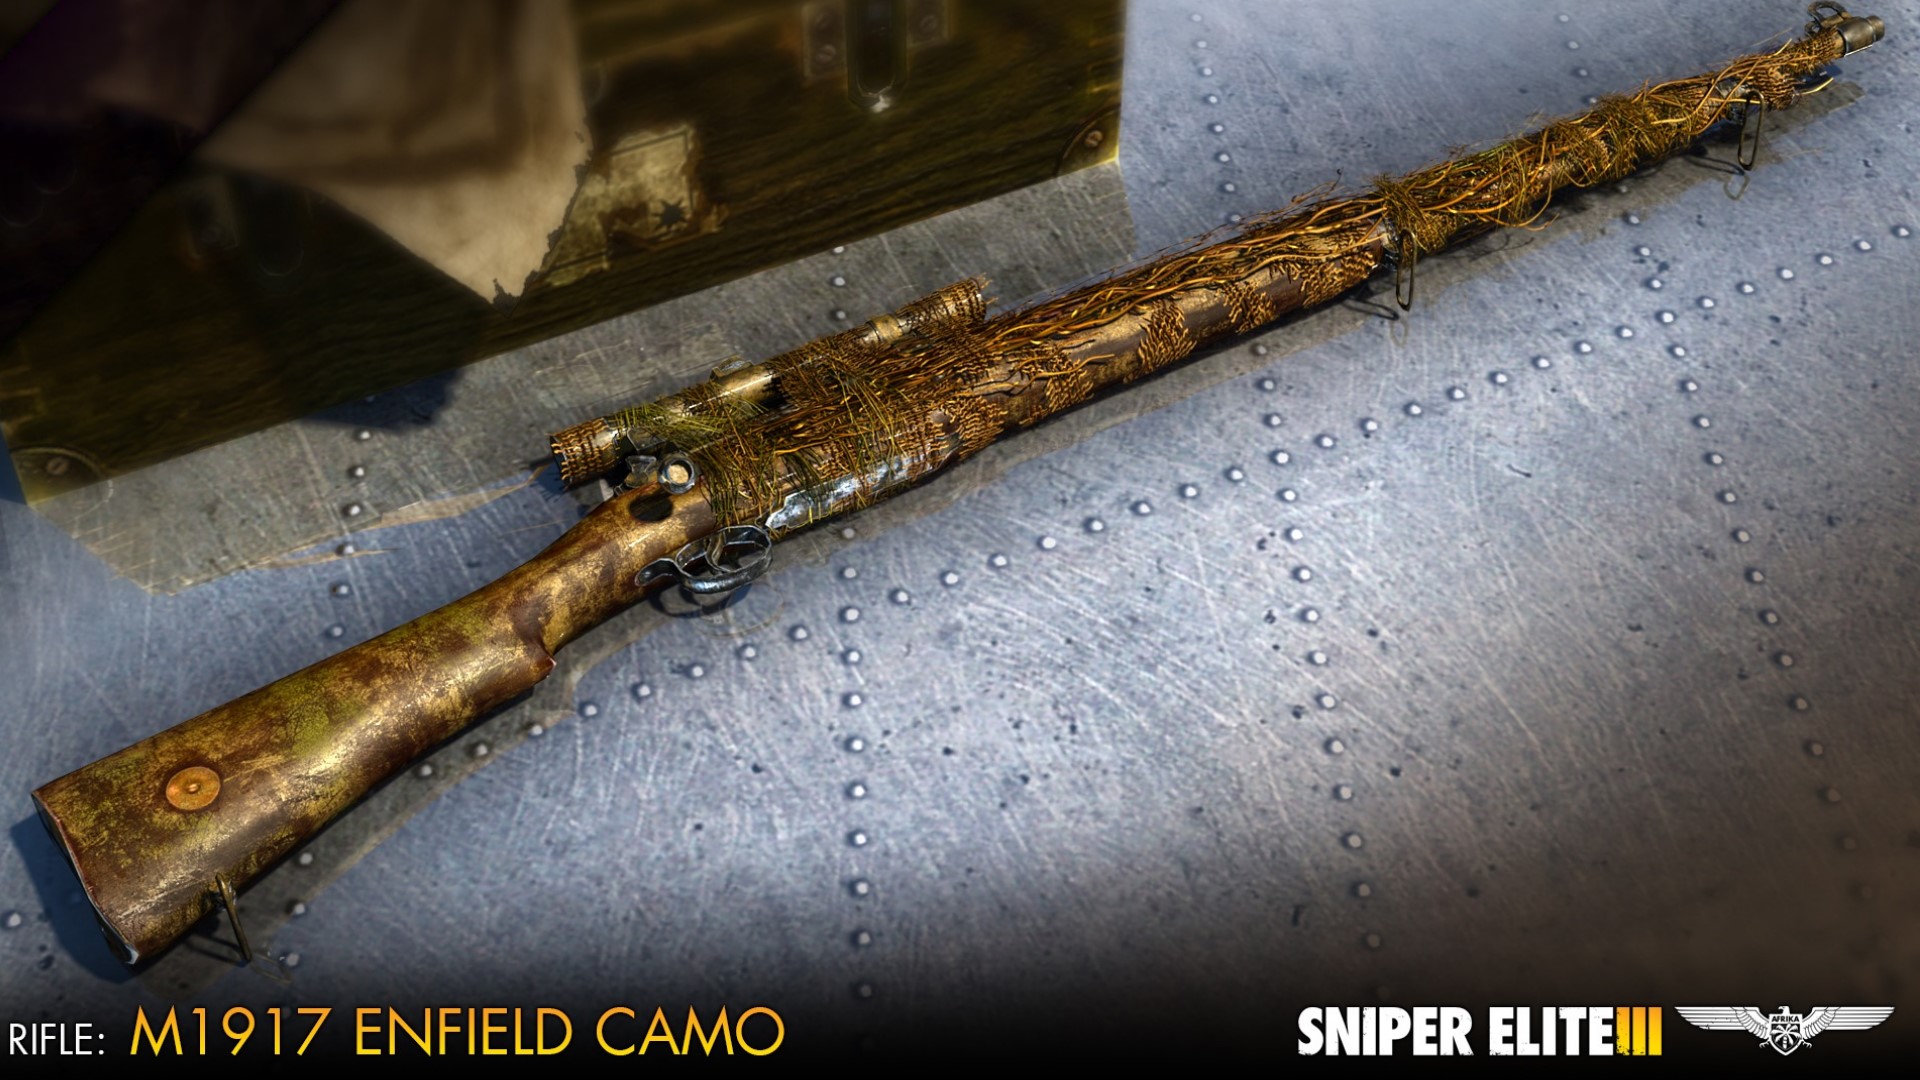 Sniper Elite 3 - U.S. Camouflage Rifles Pack DLC Steam CD Key